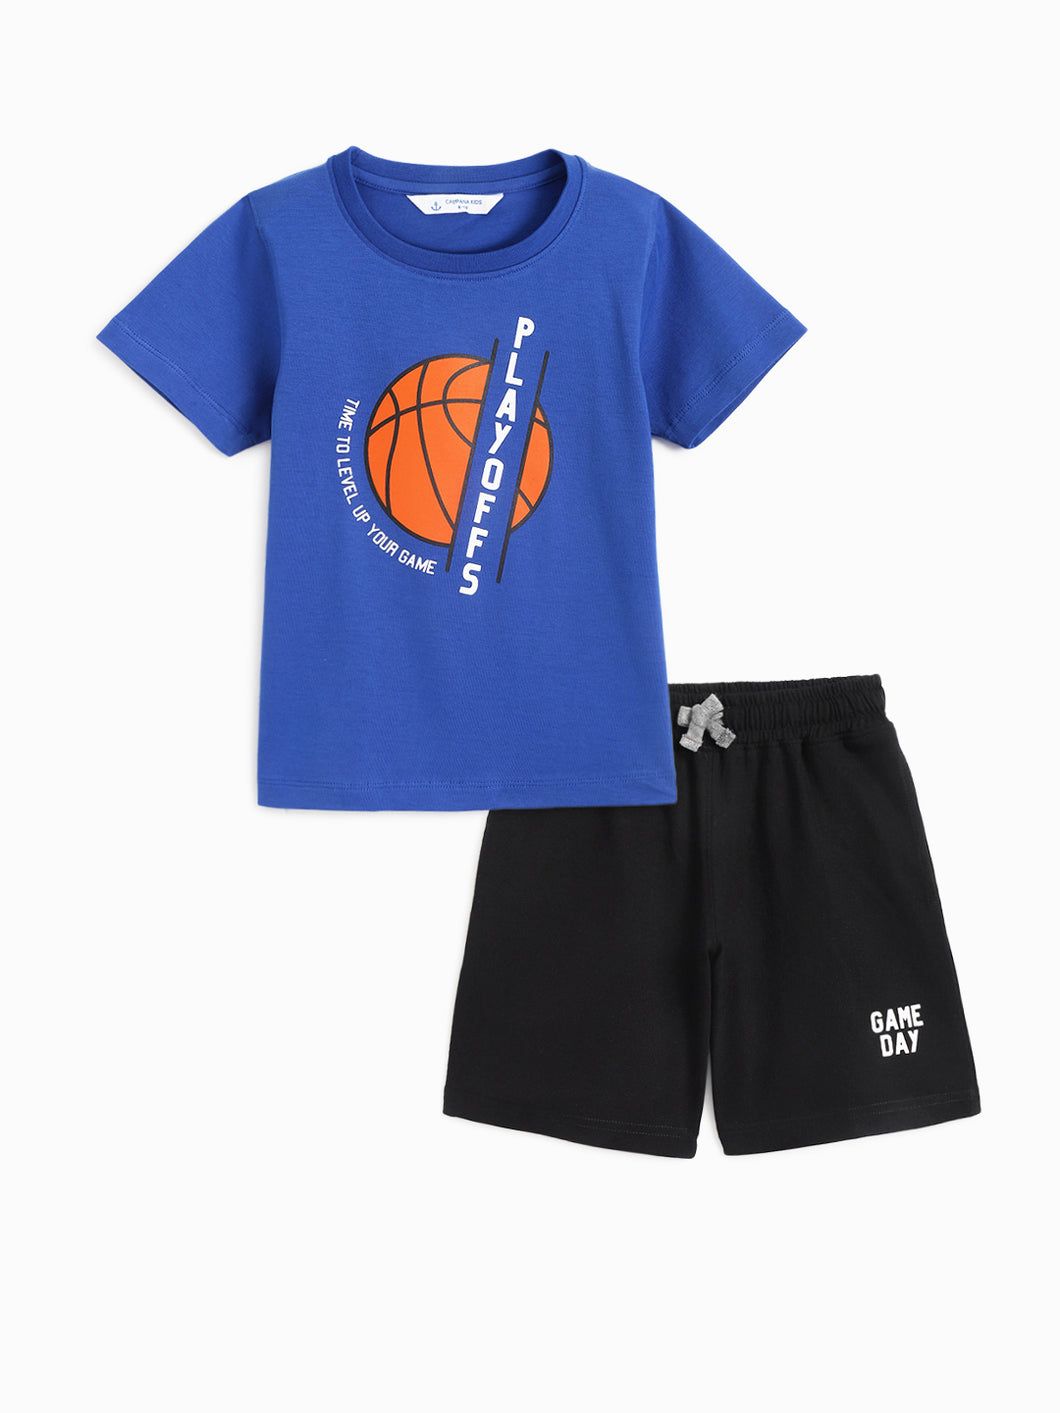 Campana Boys Daniel Half Sleeves T-Shirt with Shorts Clothing Set - Basketball Print - Purplish Blue & Black